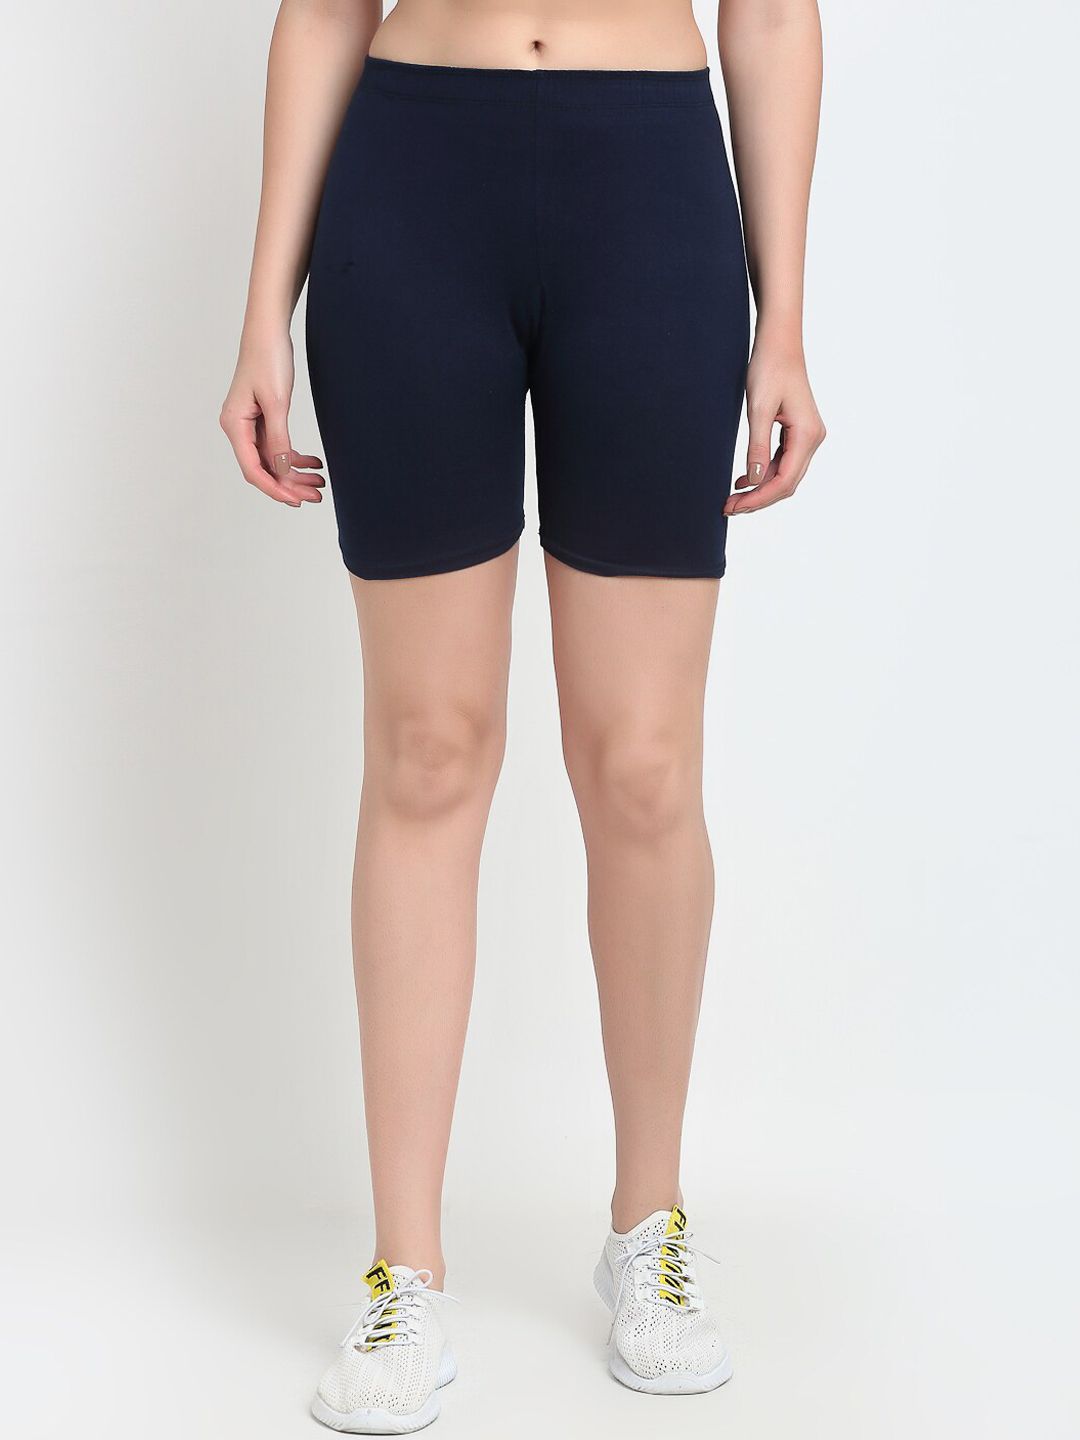 GRACIT Women Navy Blue Biker Shorts Price in India